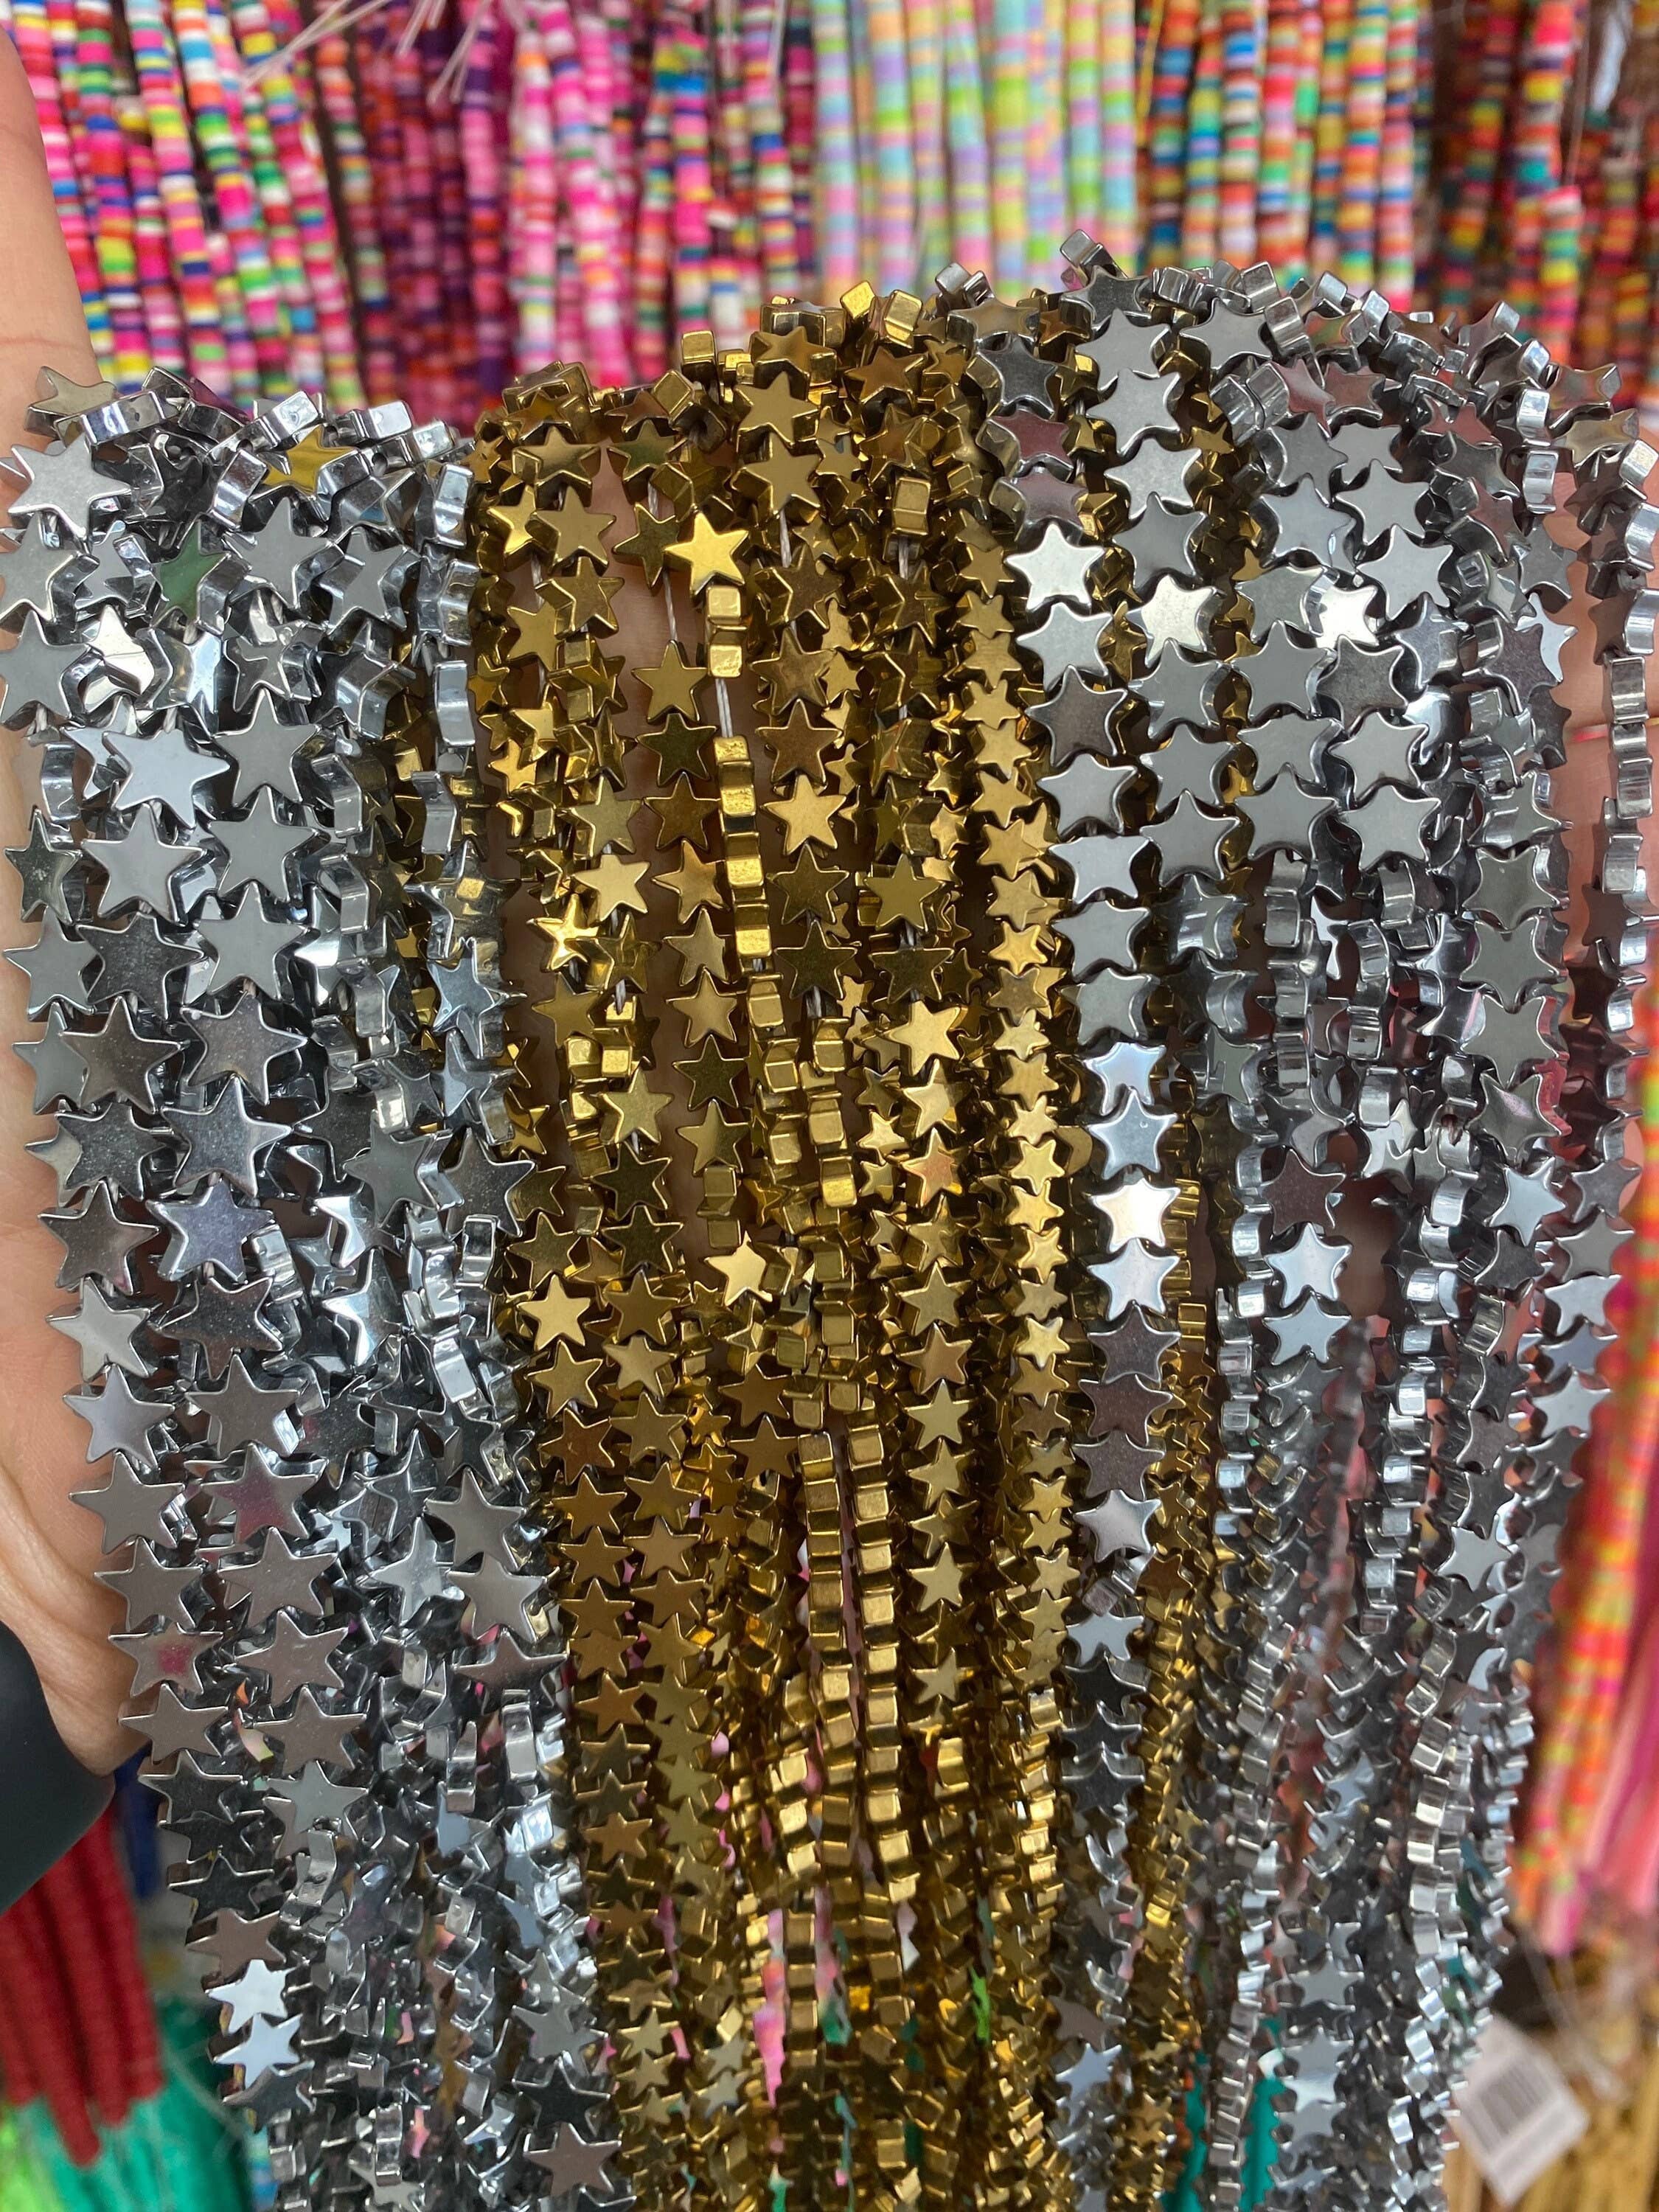 Beaded Tribal Drop Collar - Brass Beaded Collection, Brass Beaded  Necklaces, Brass Necklaces, Necklaces/Bracelets - Baizaar Jewelry